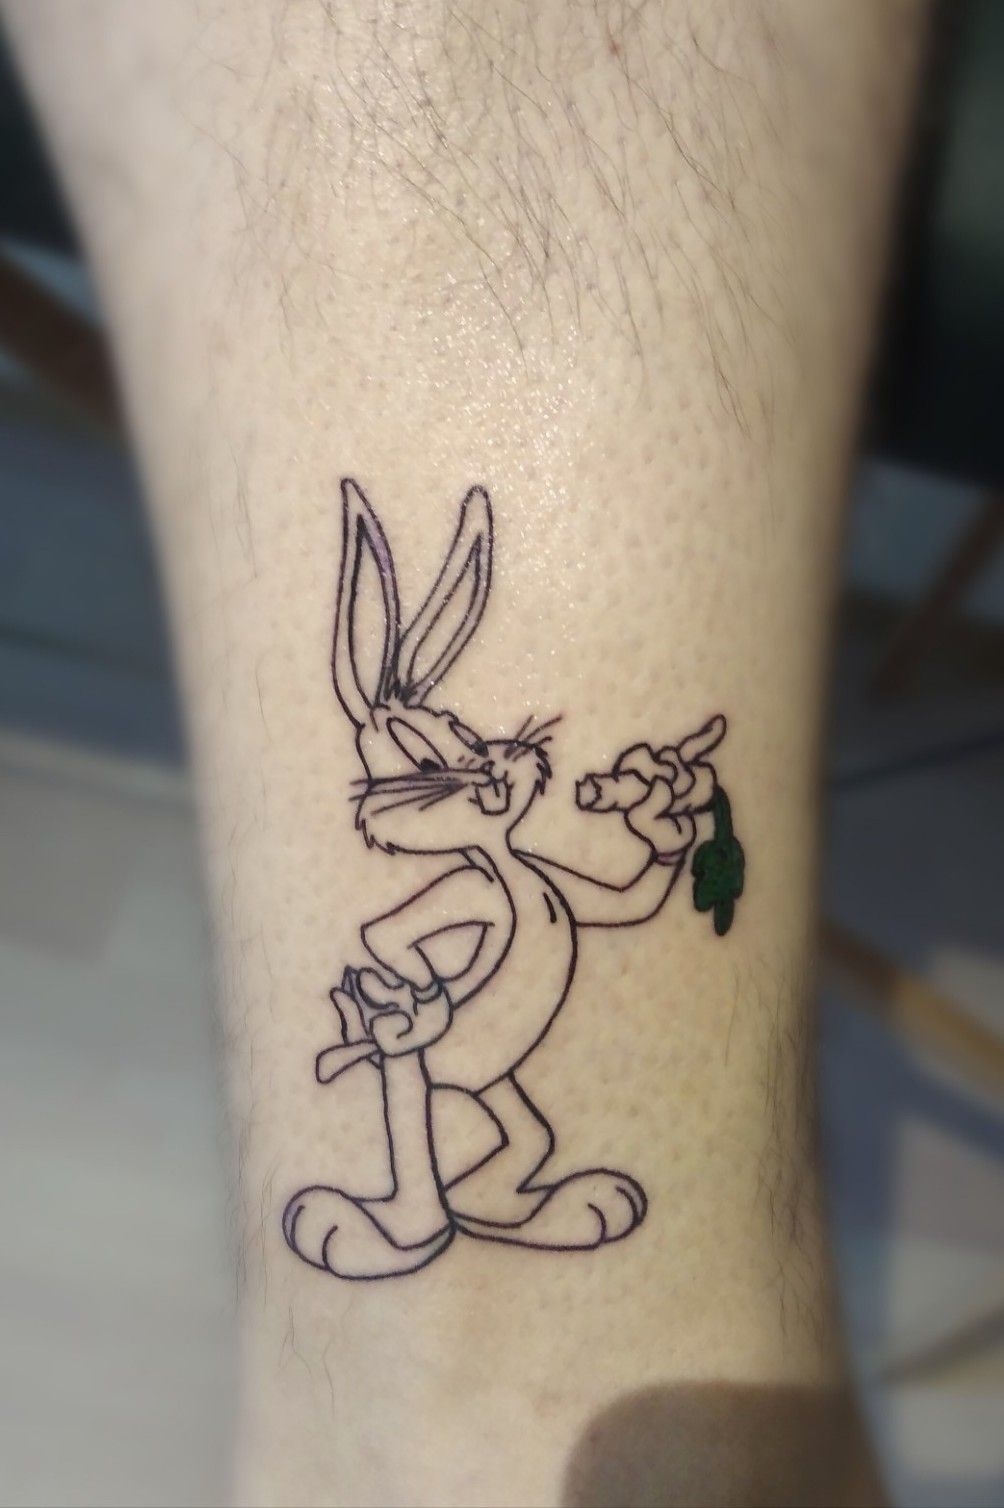 Happy Bugs Bunny Day Heres Some Tattoos Fur You  freshlyinkedmagazine